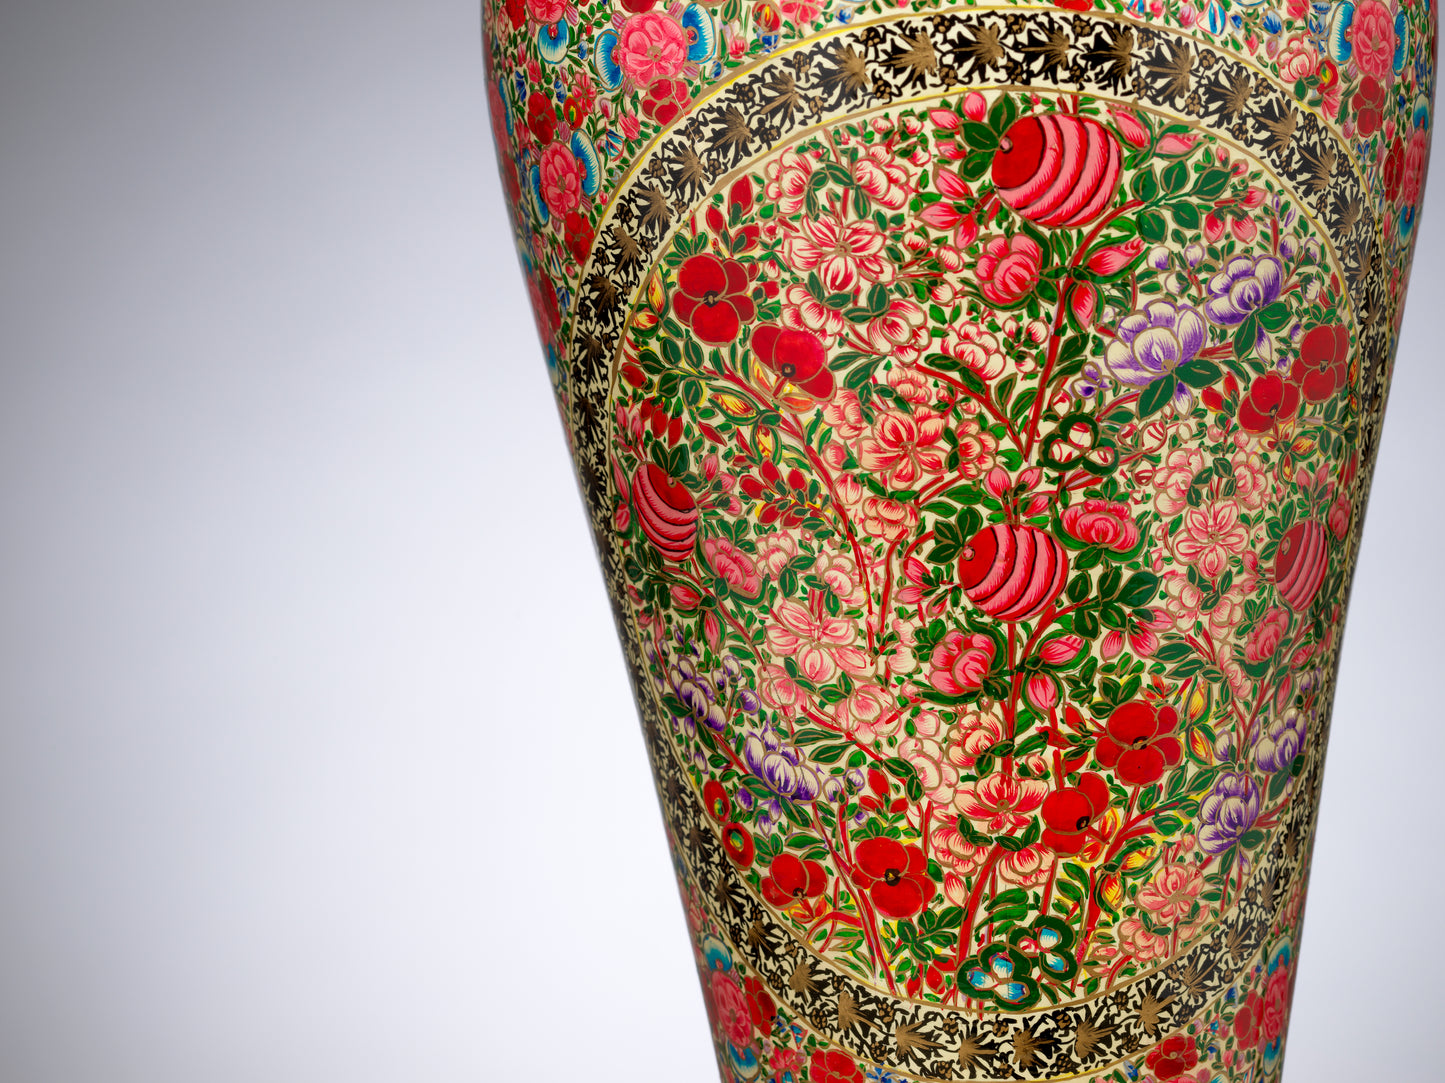 Exquisite Vase - Limited Edition